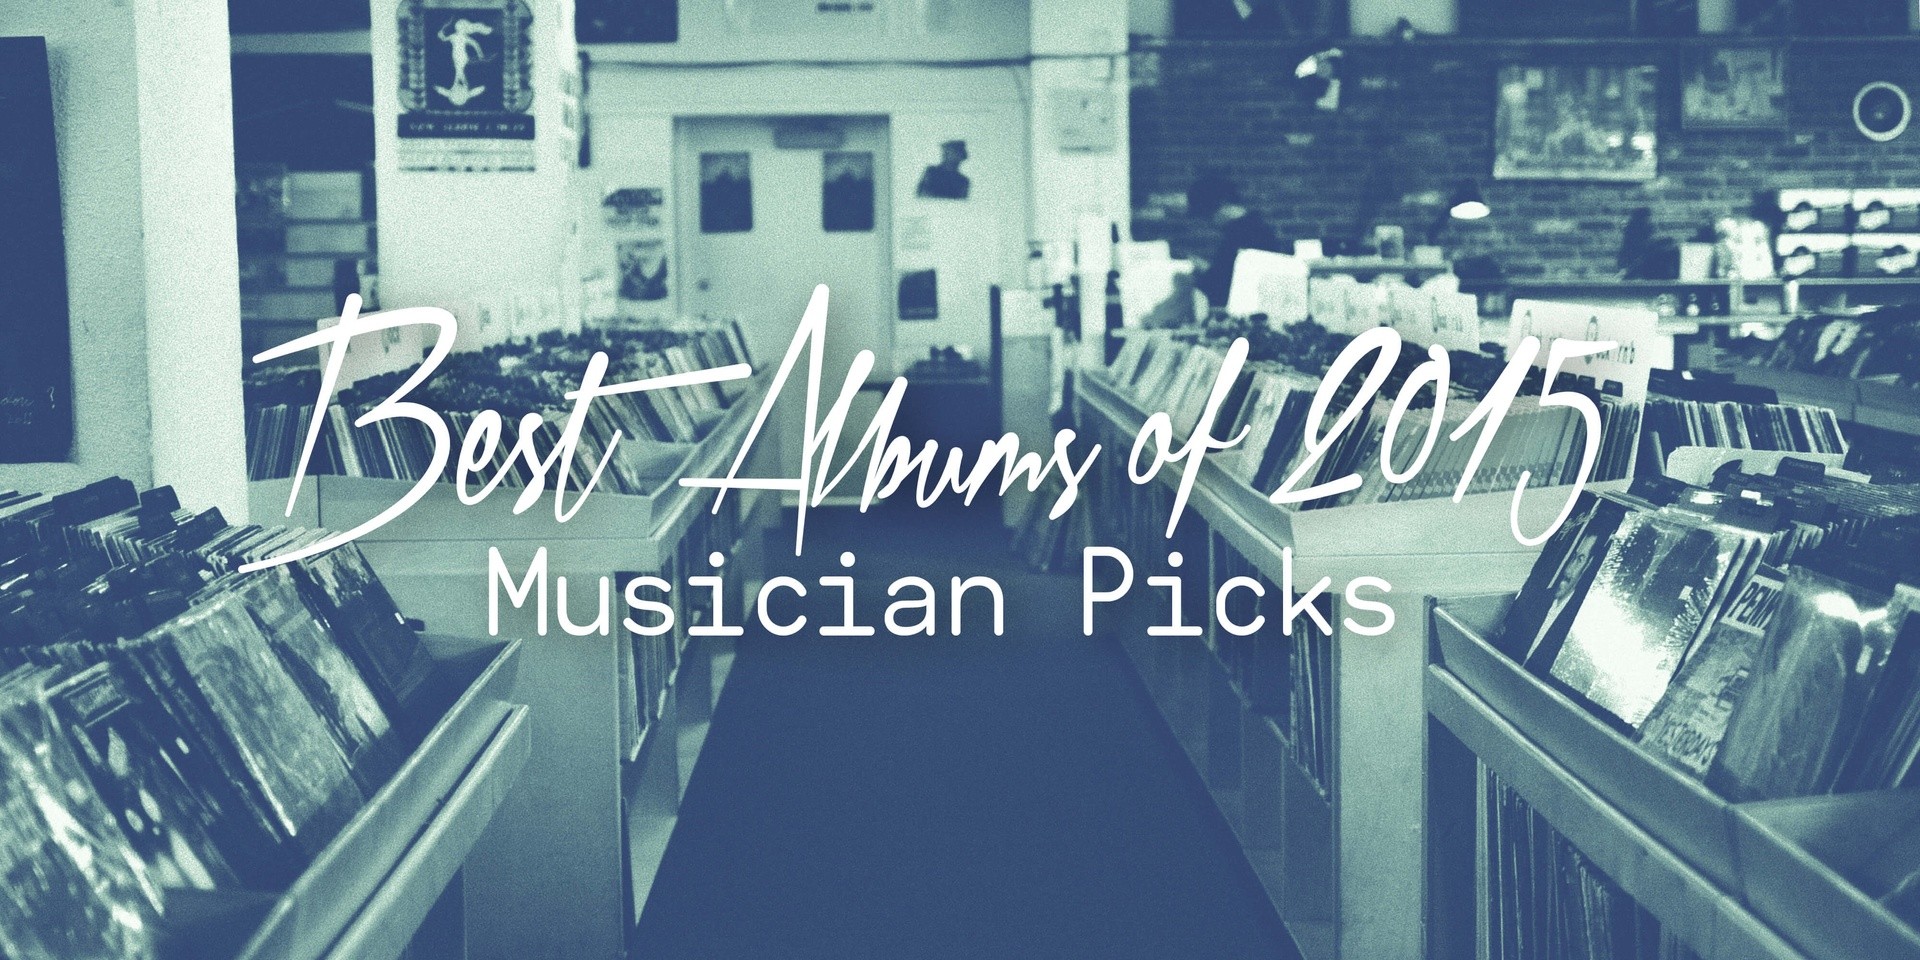 Best Albums of 2015: Musician Picks